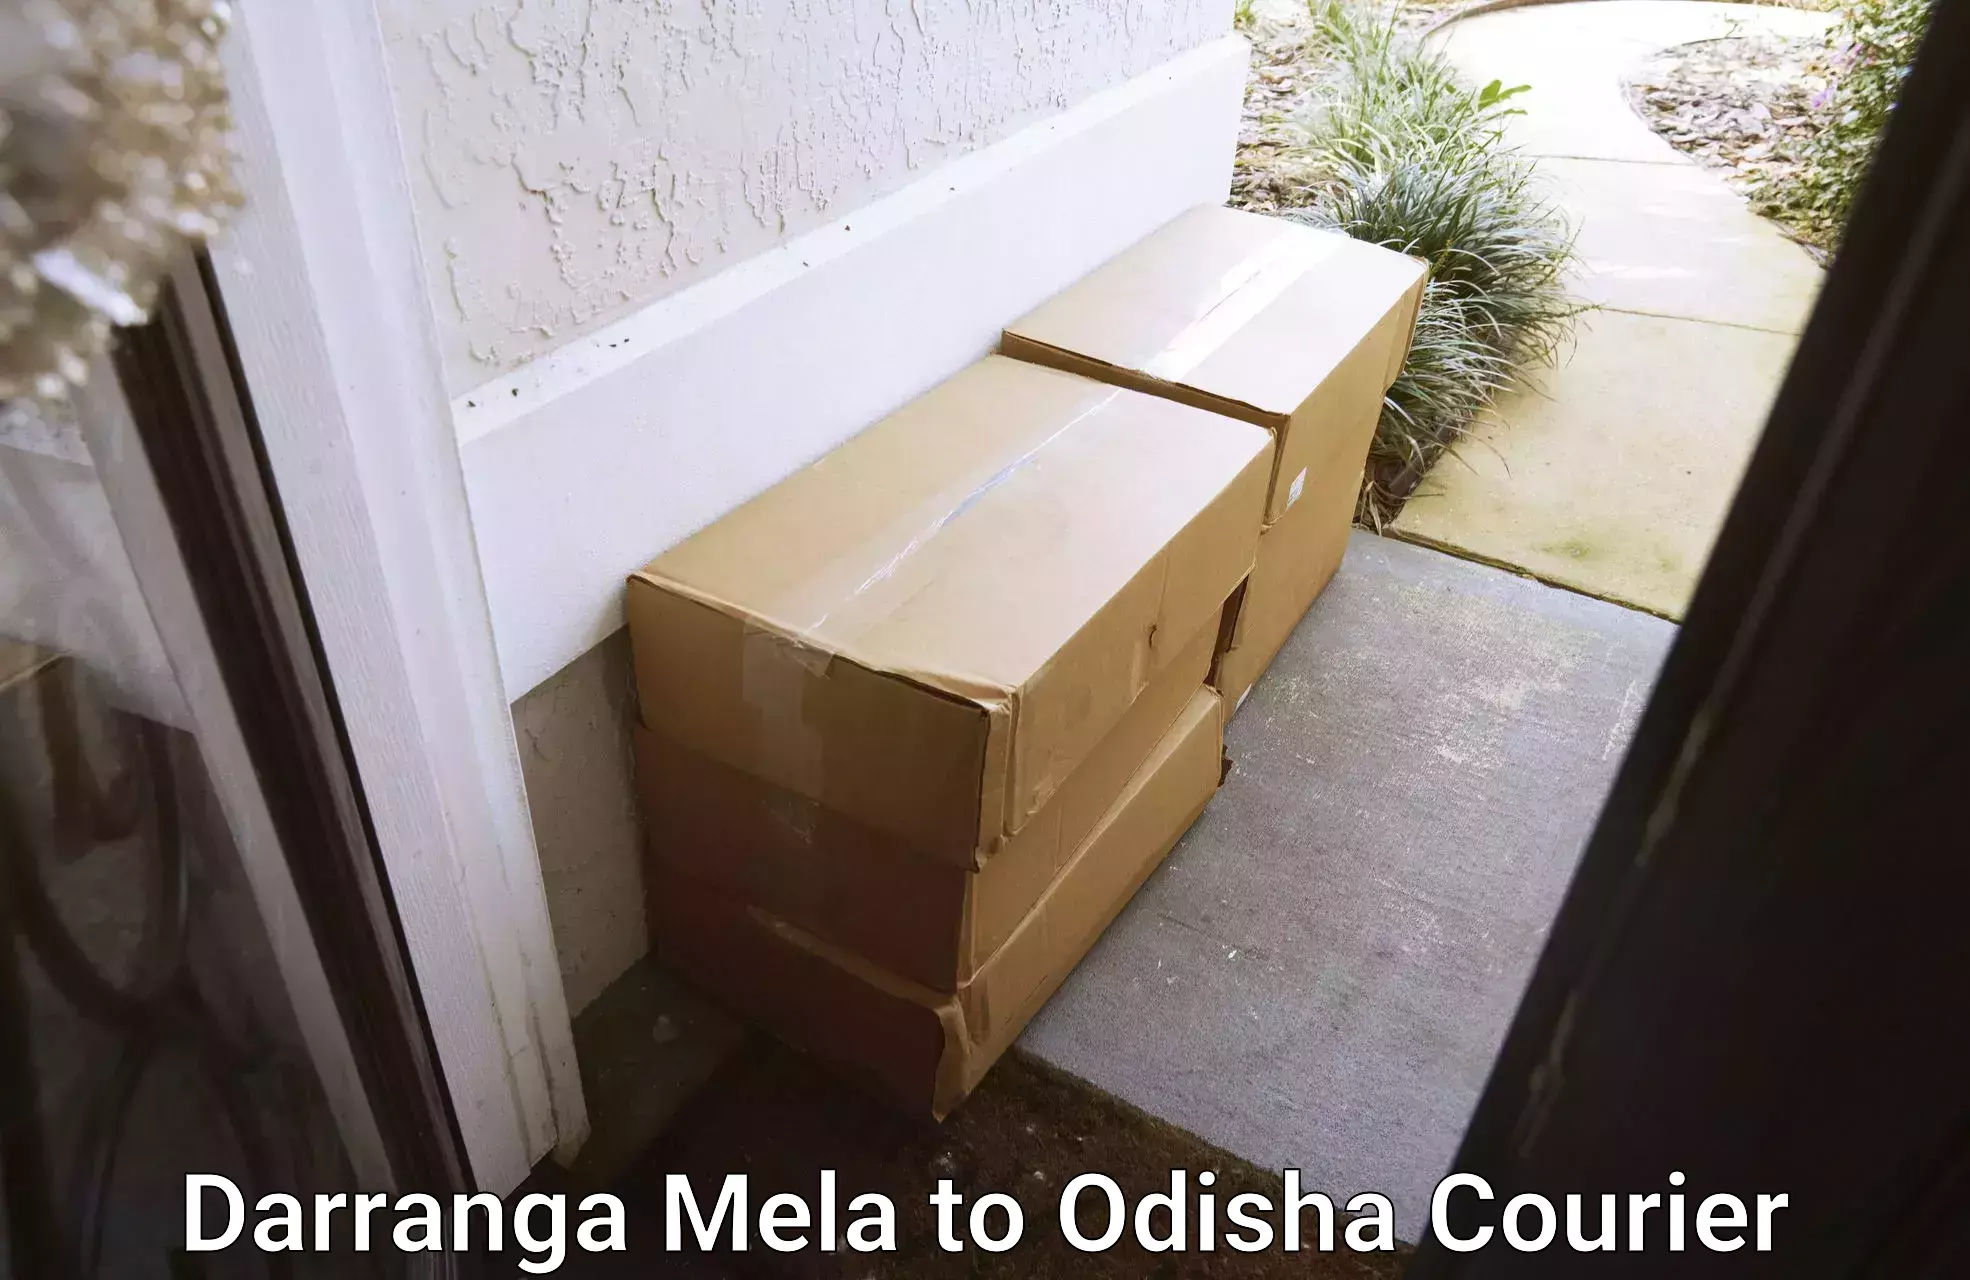 Weekend courier service Darranga Mela to Bhawanipatna